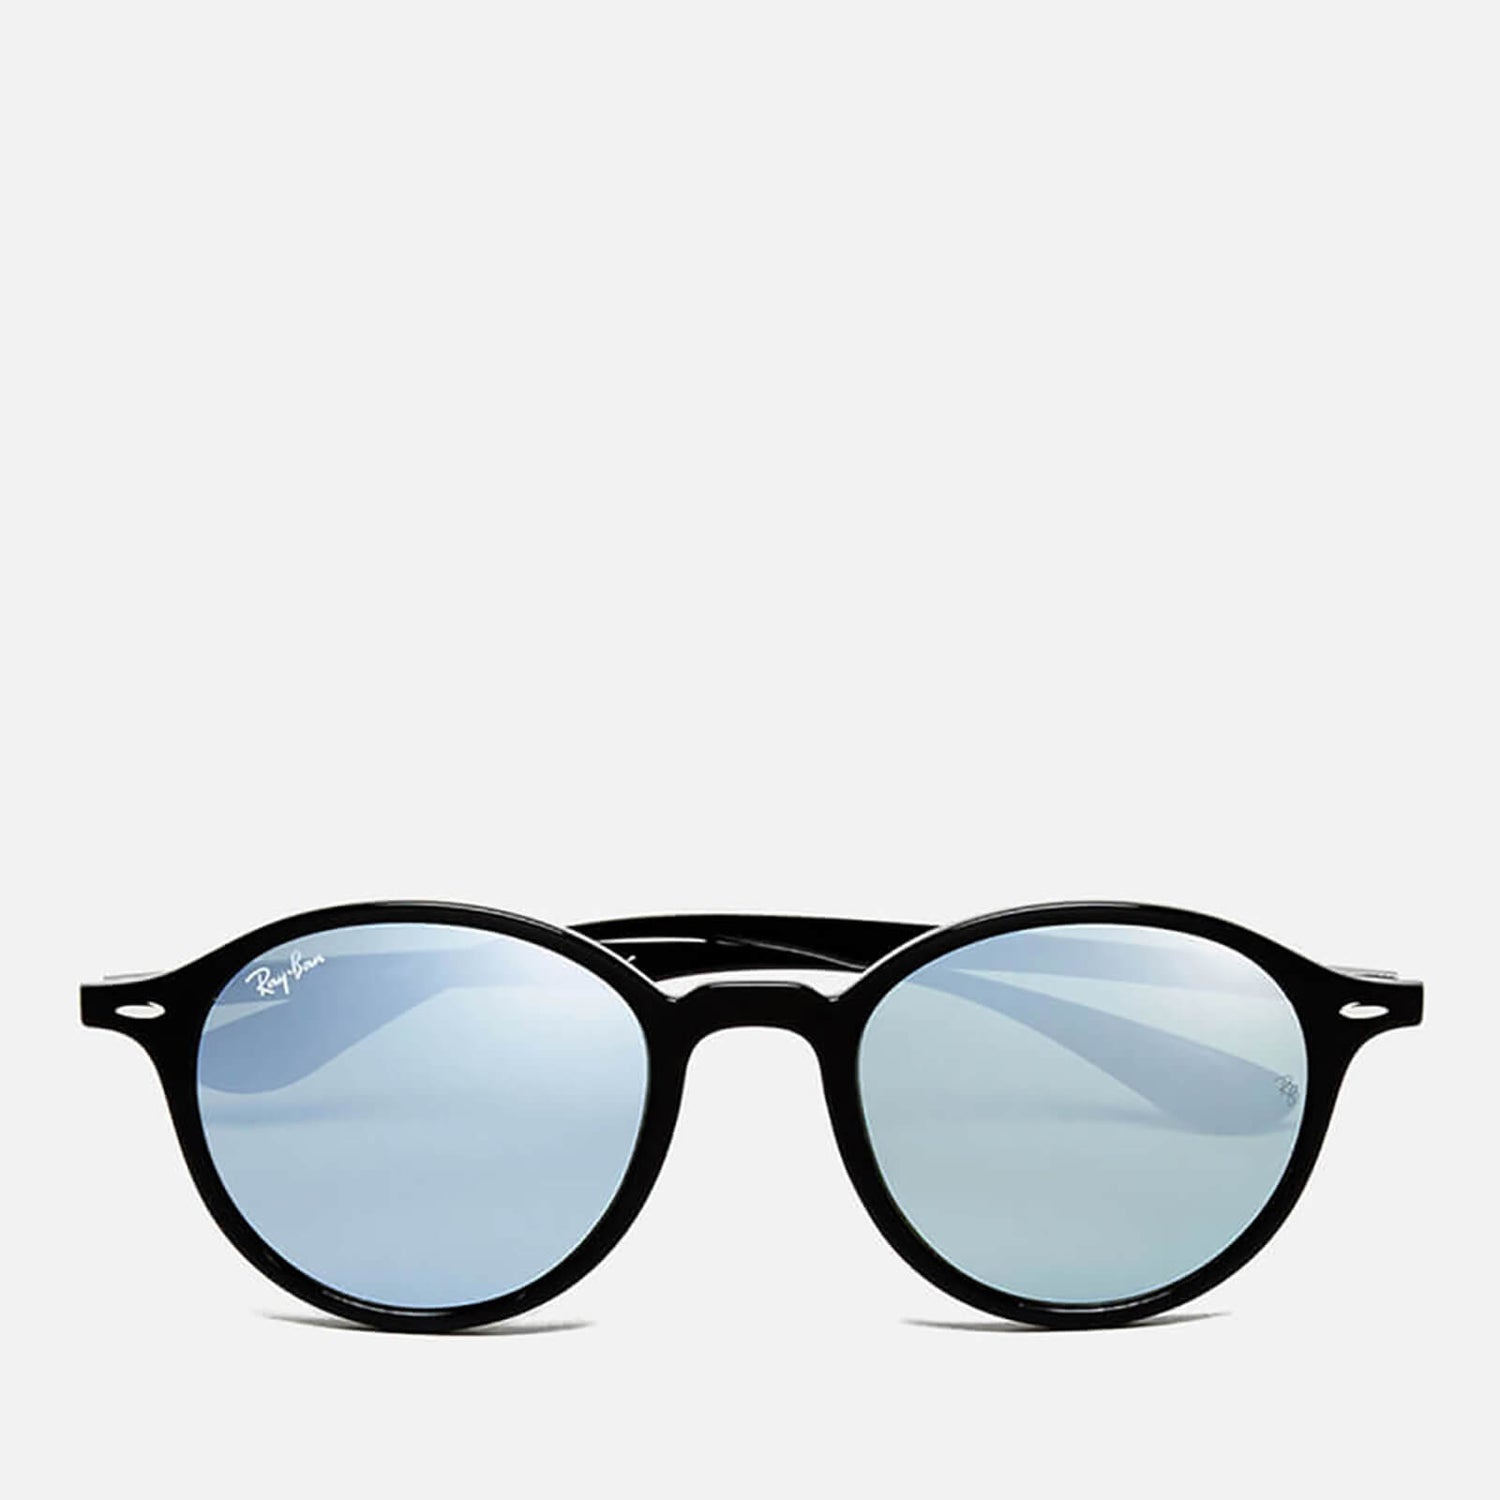 Ray-Ban Round Classic Sunglasses 49mm - Black